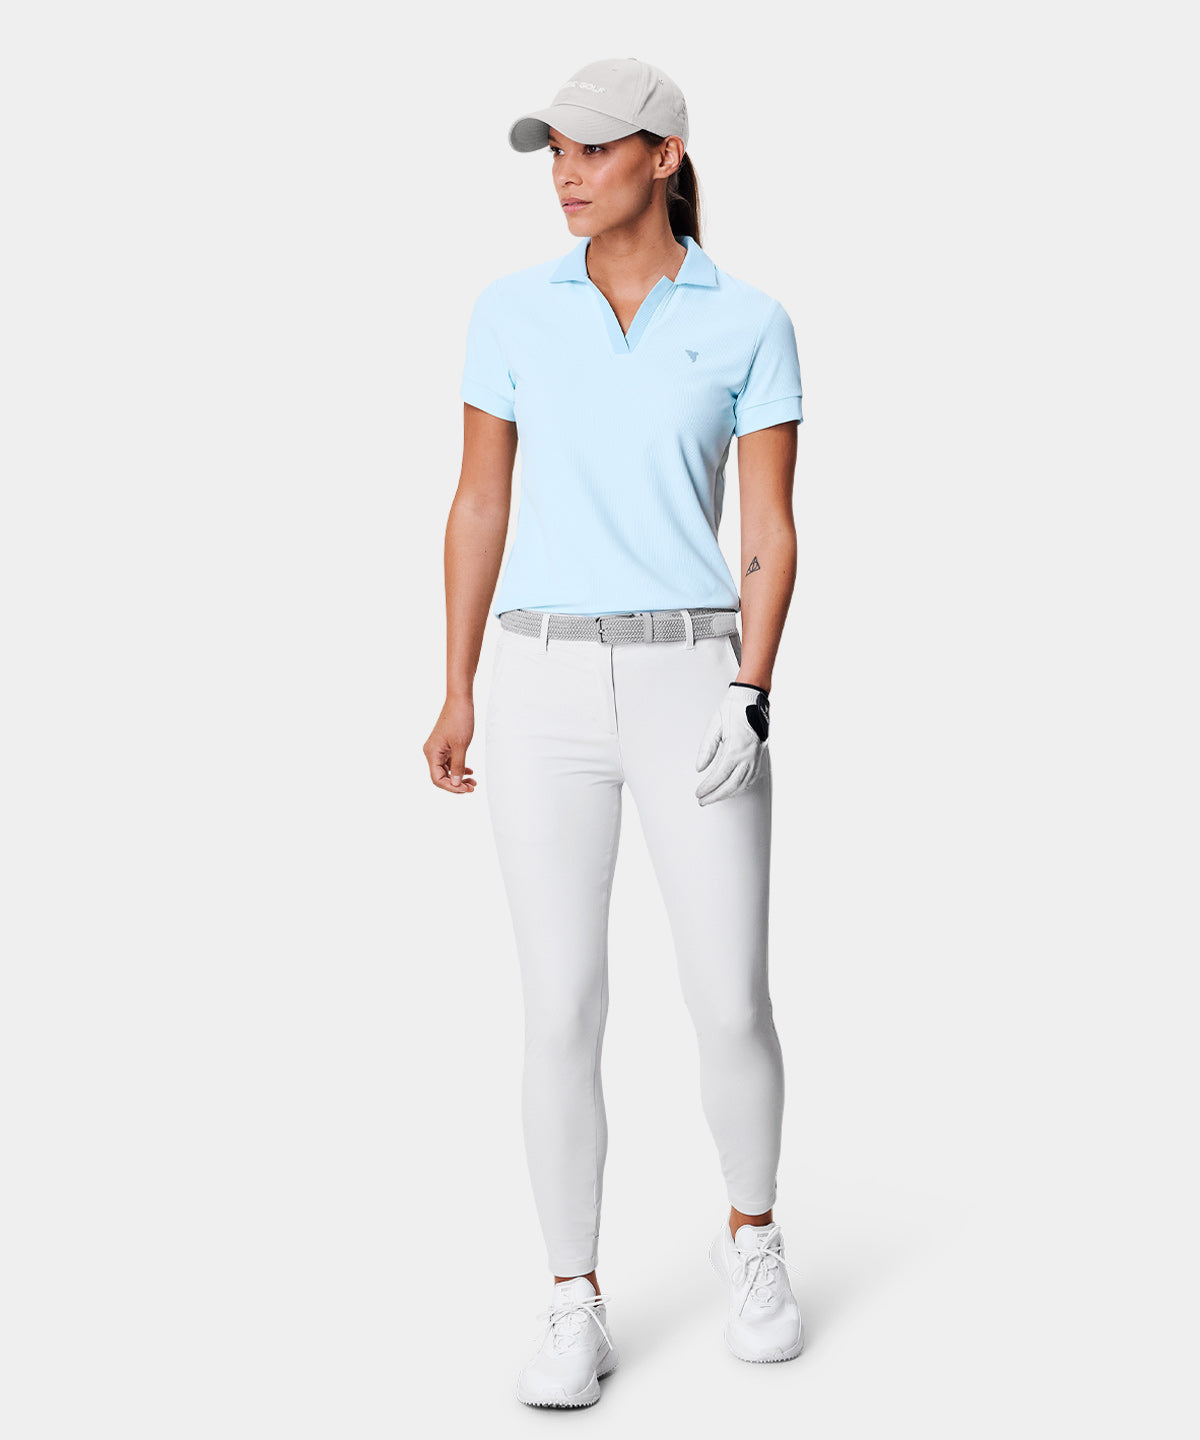 Tori Dark Blue Polo Shirt - Macade Golf